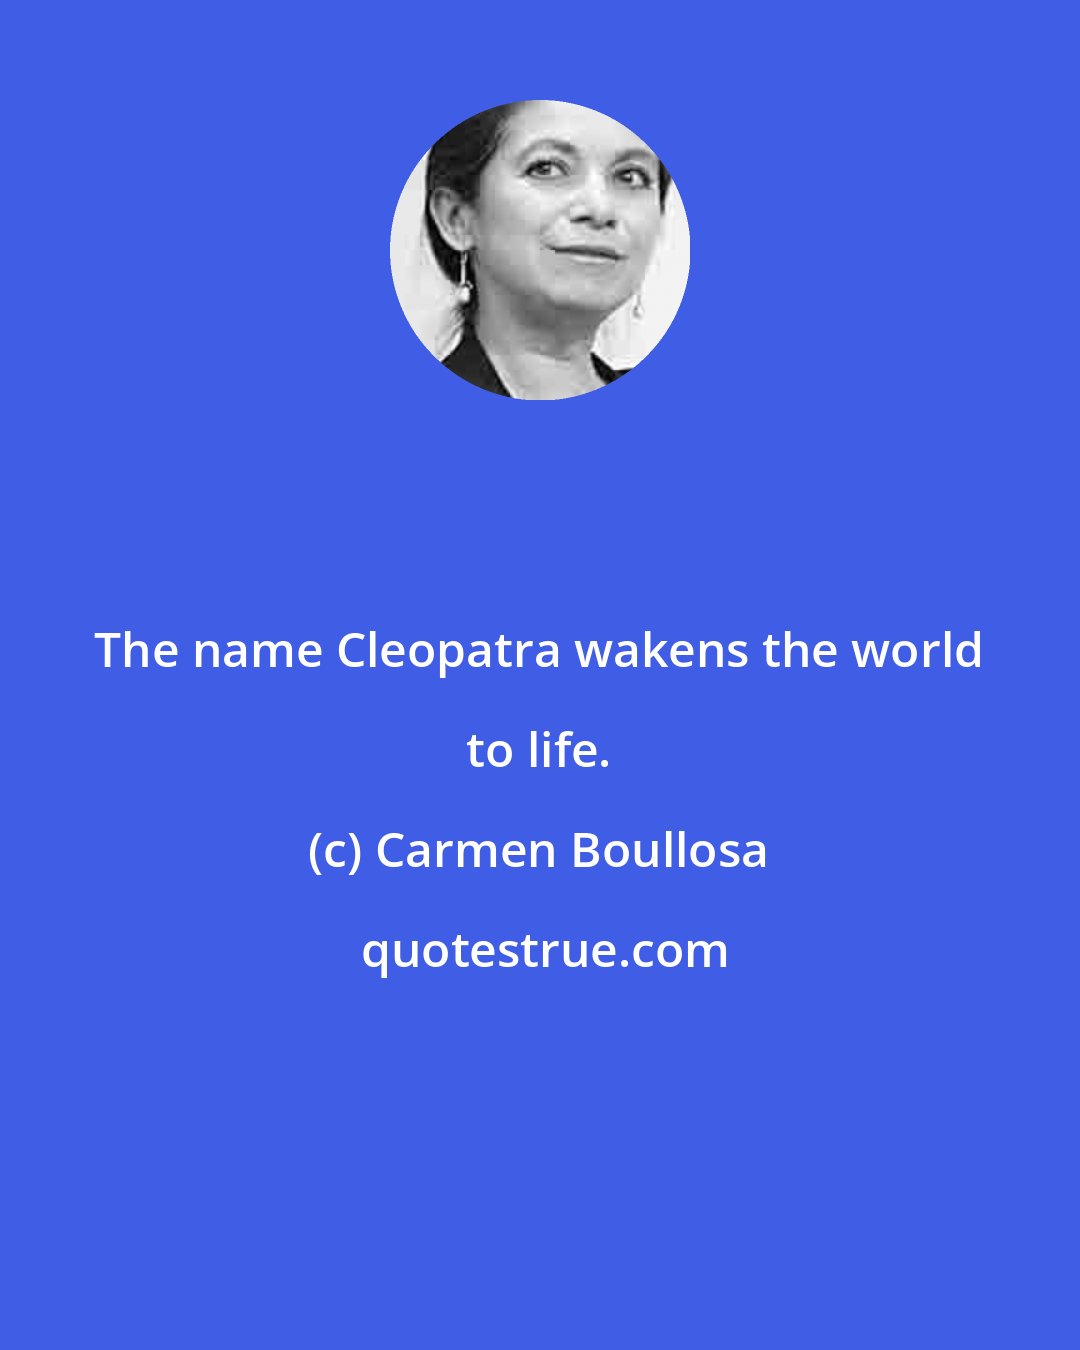 Carmen Boullosa: The name Cleopatra wakens the world to life.